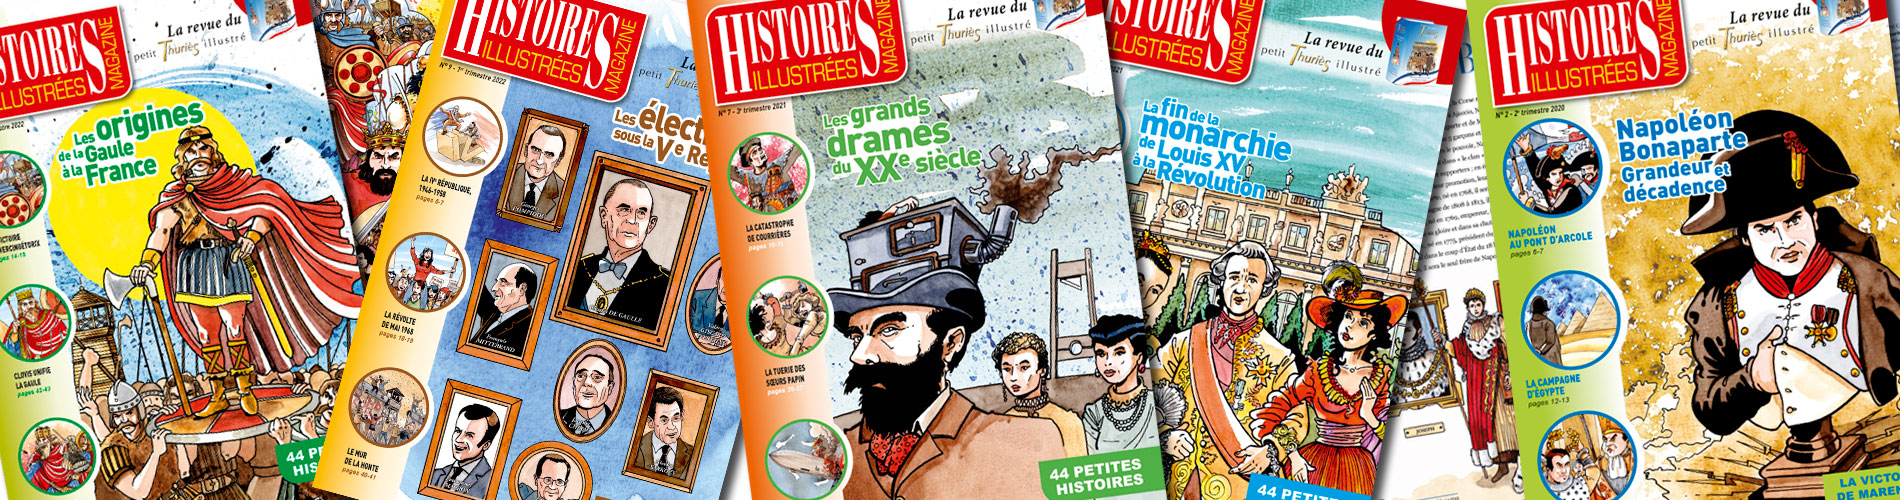 header Presse Histoires Illustrees magazine Yves Thuries